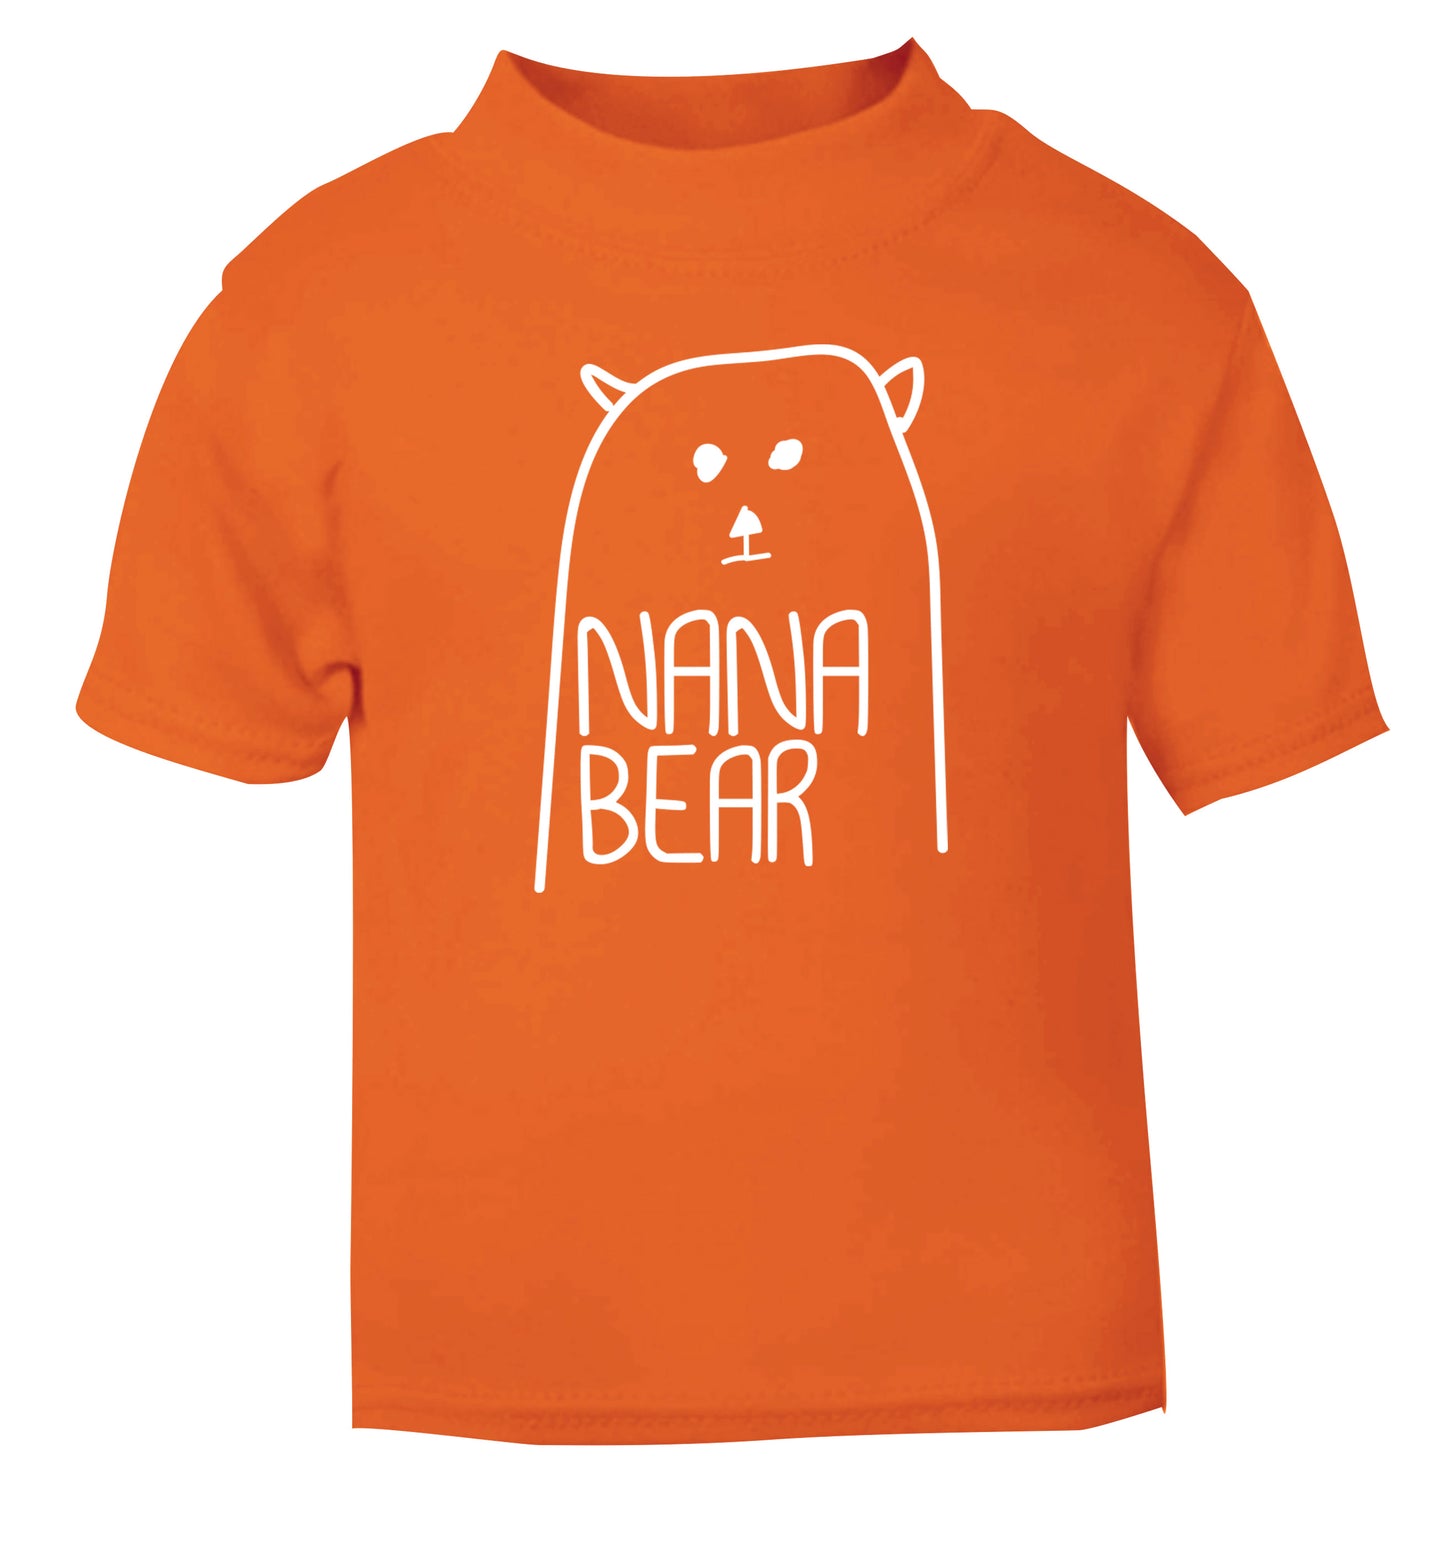 Nana bear orange Baby Toddler Tshirt 2 Years